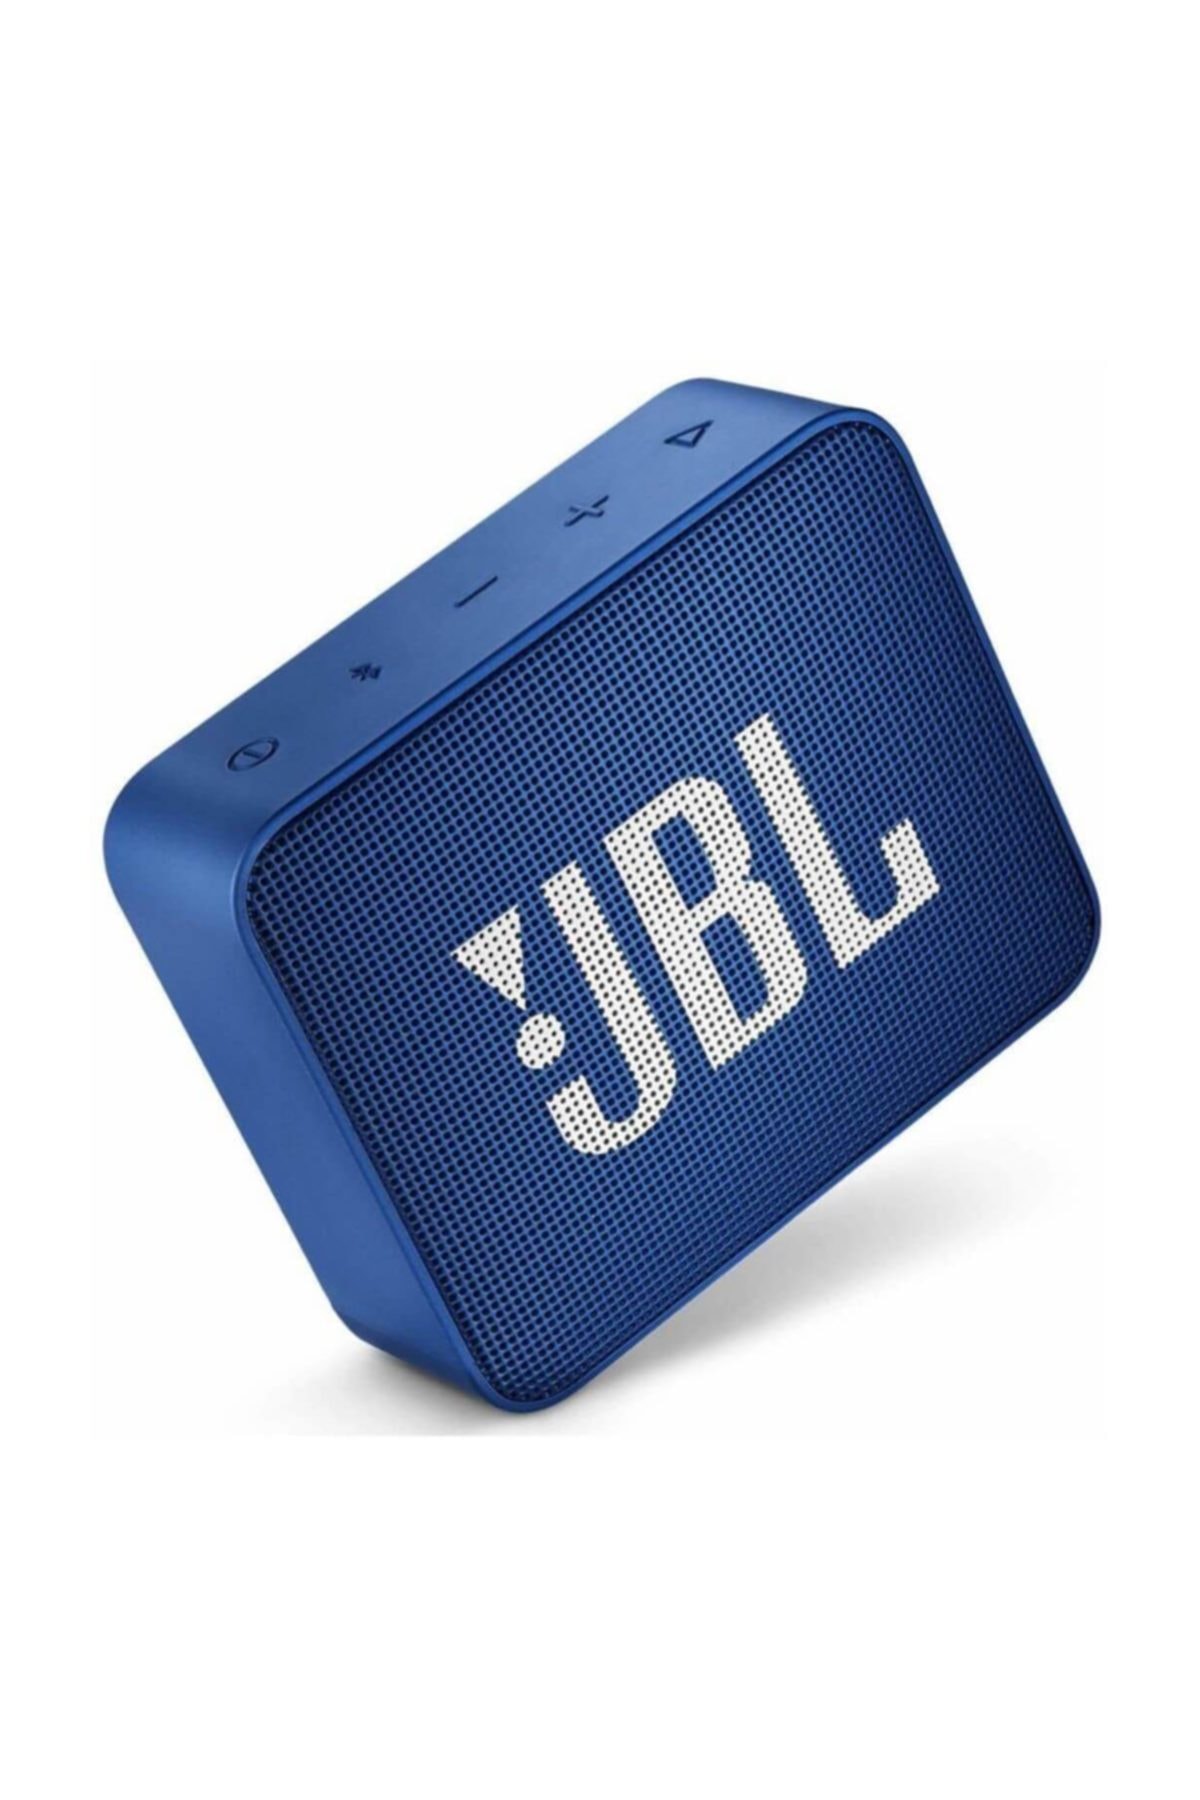 GO 2 IPX7 Bluetooth Portable Speaker Blue